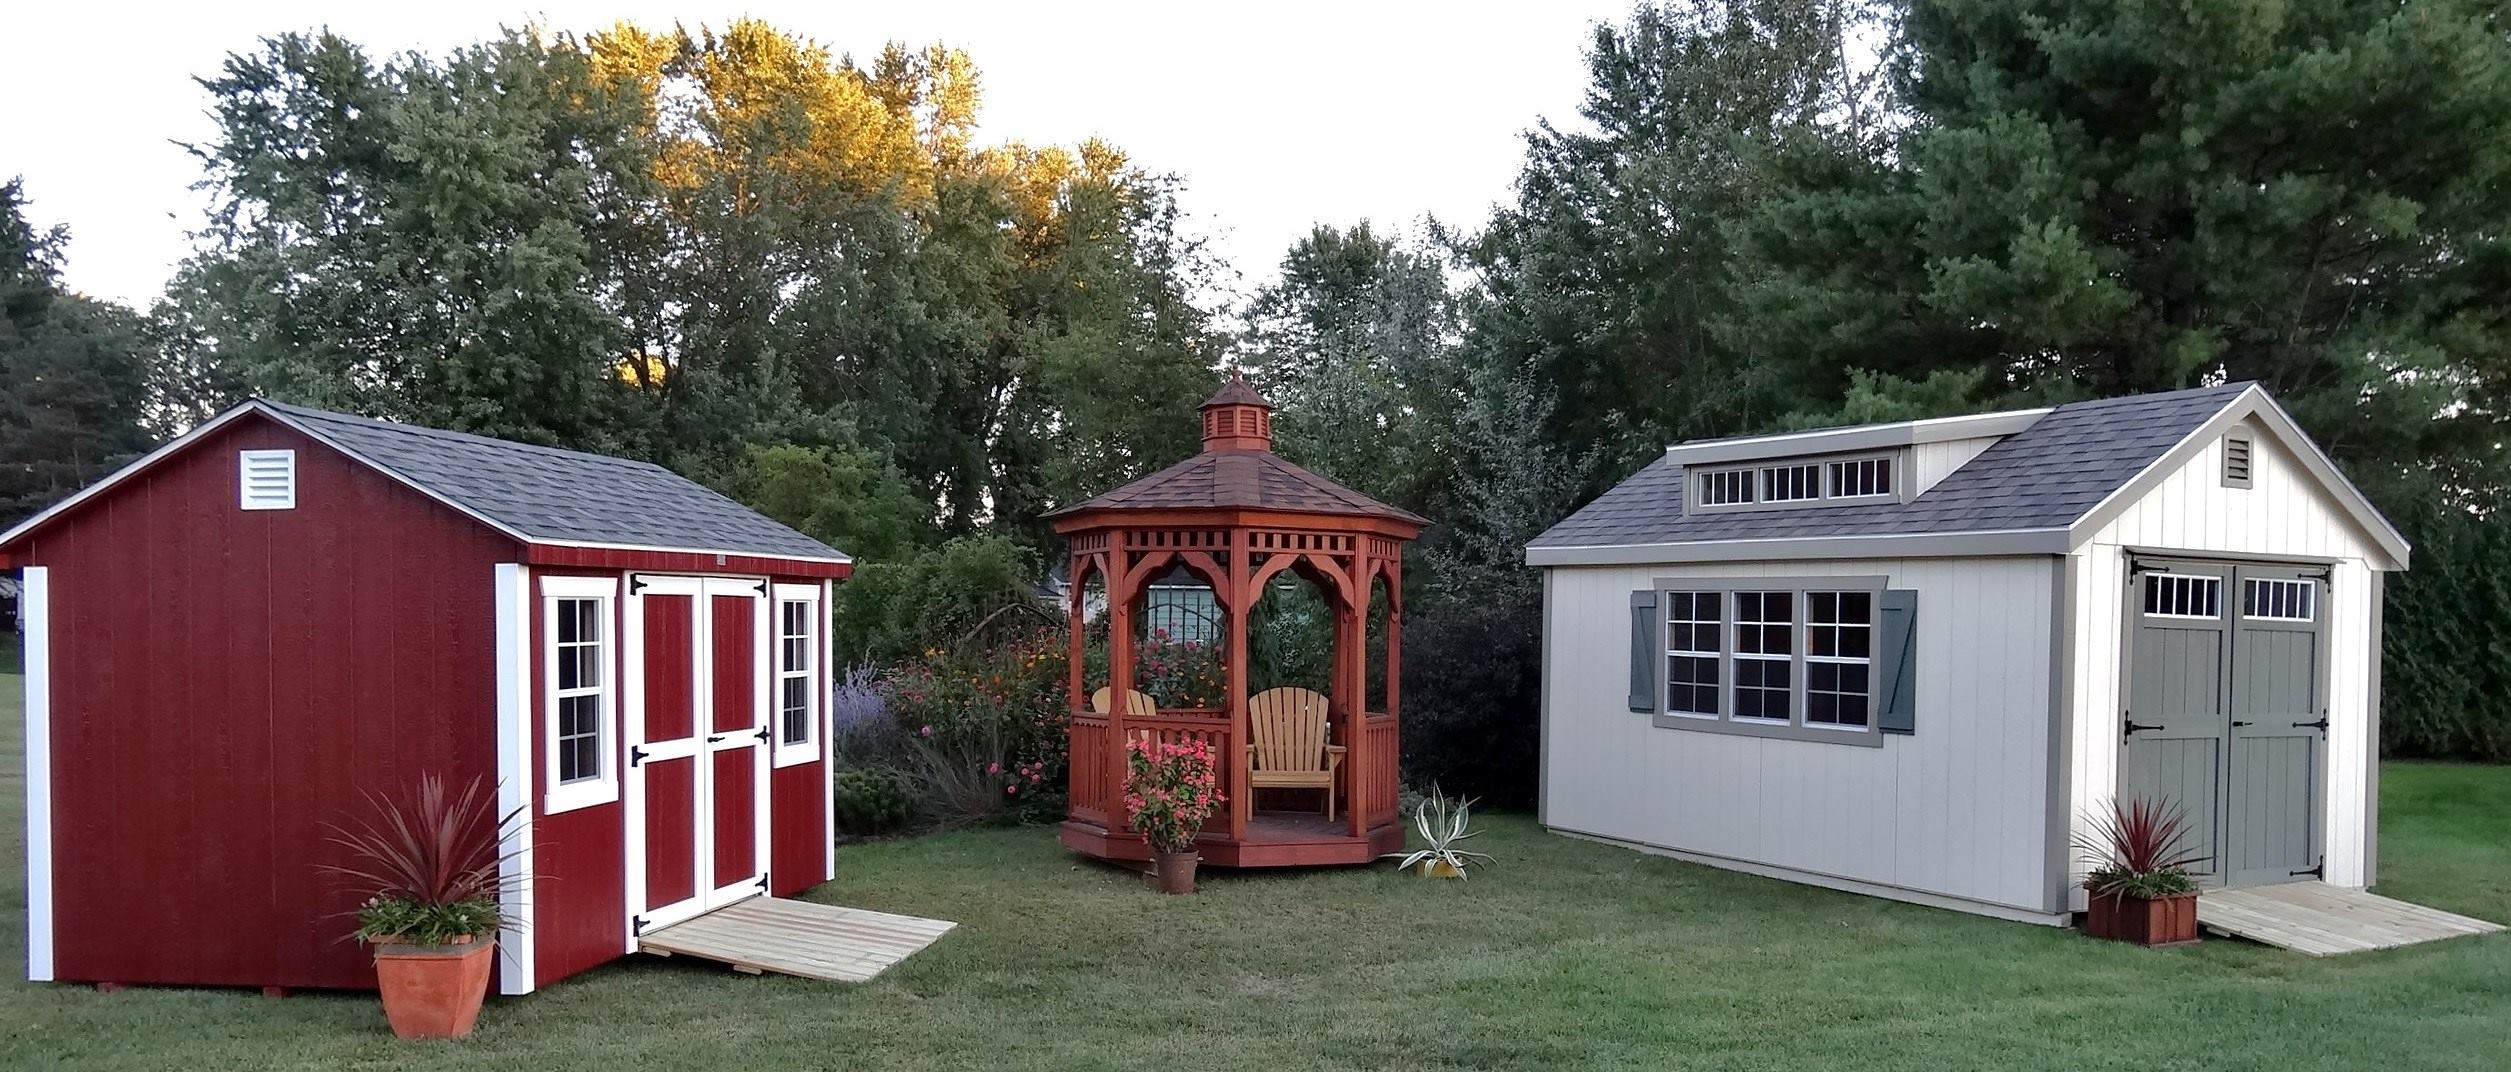 3 styles of backyard buildings